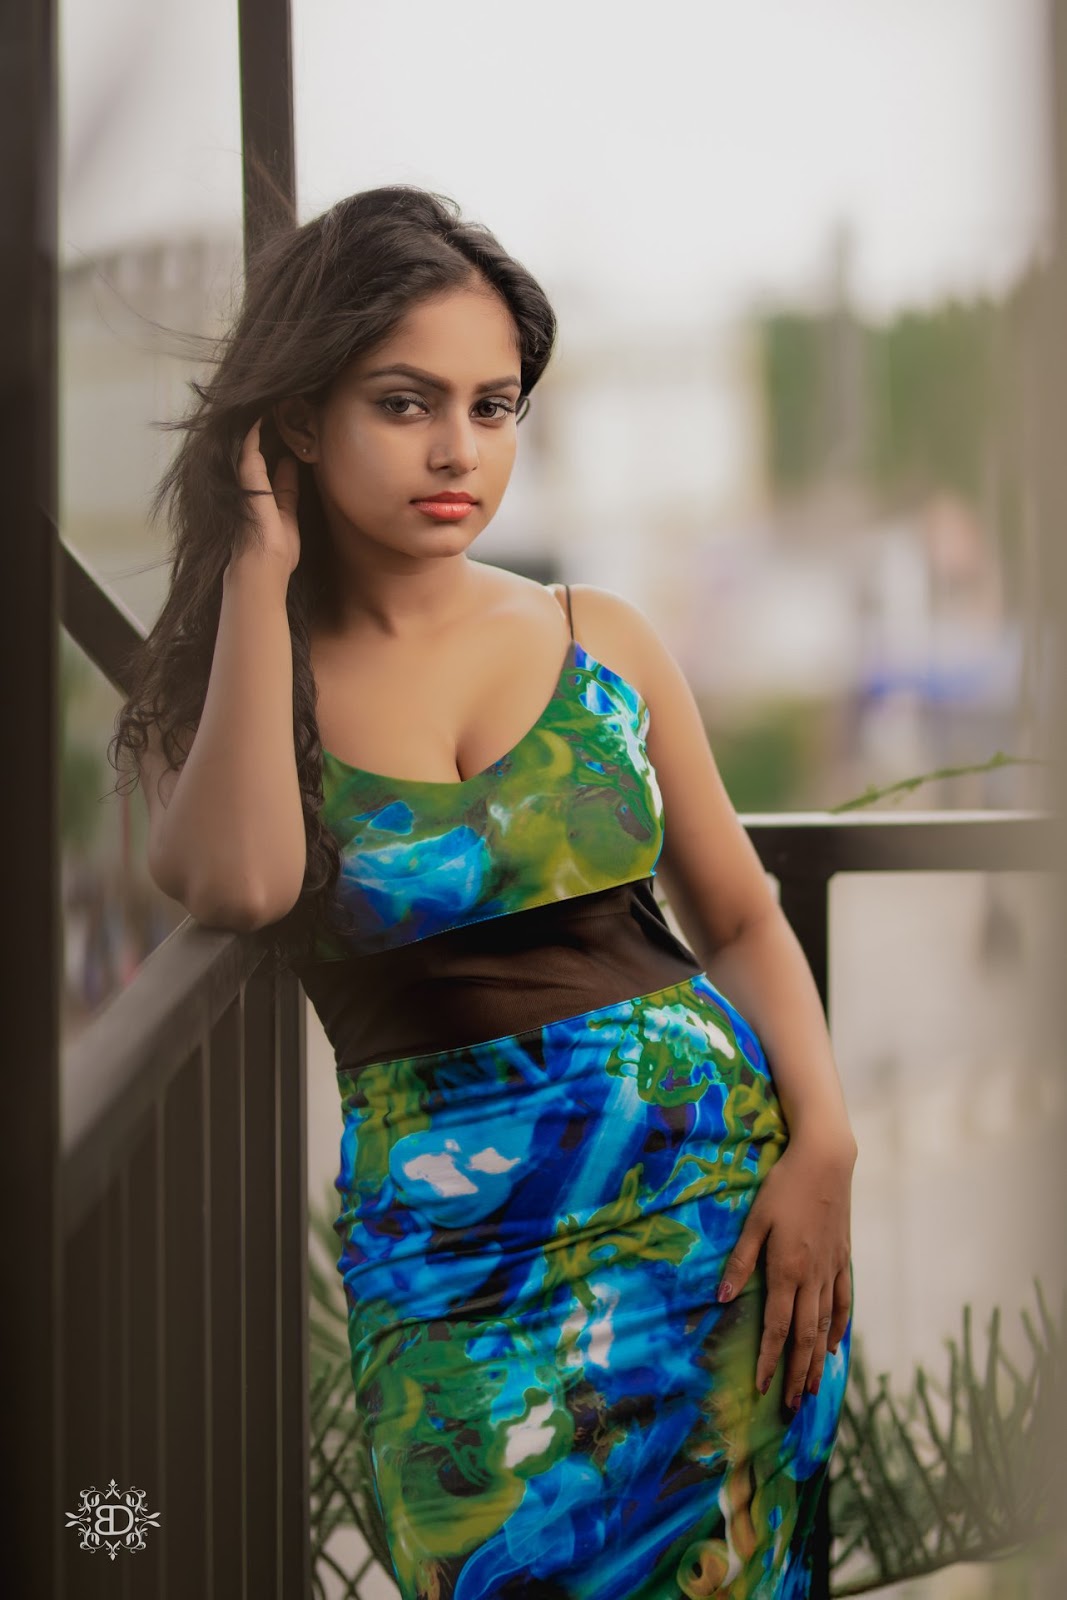 Geethma Bandara Srilanka Models Zone 24x7